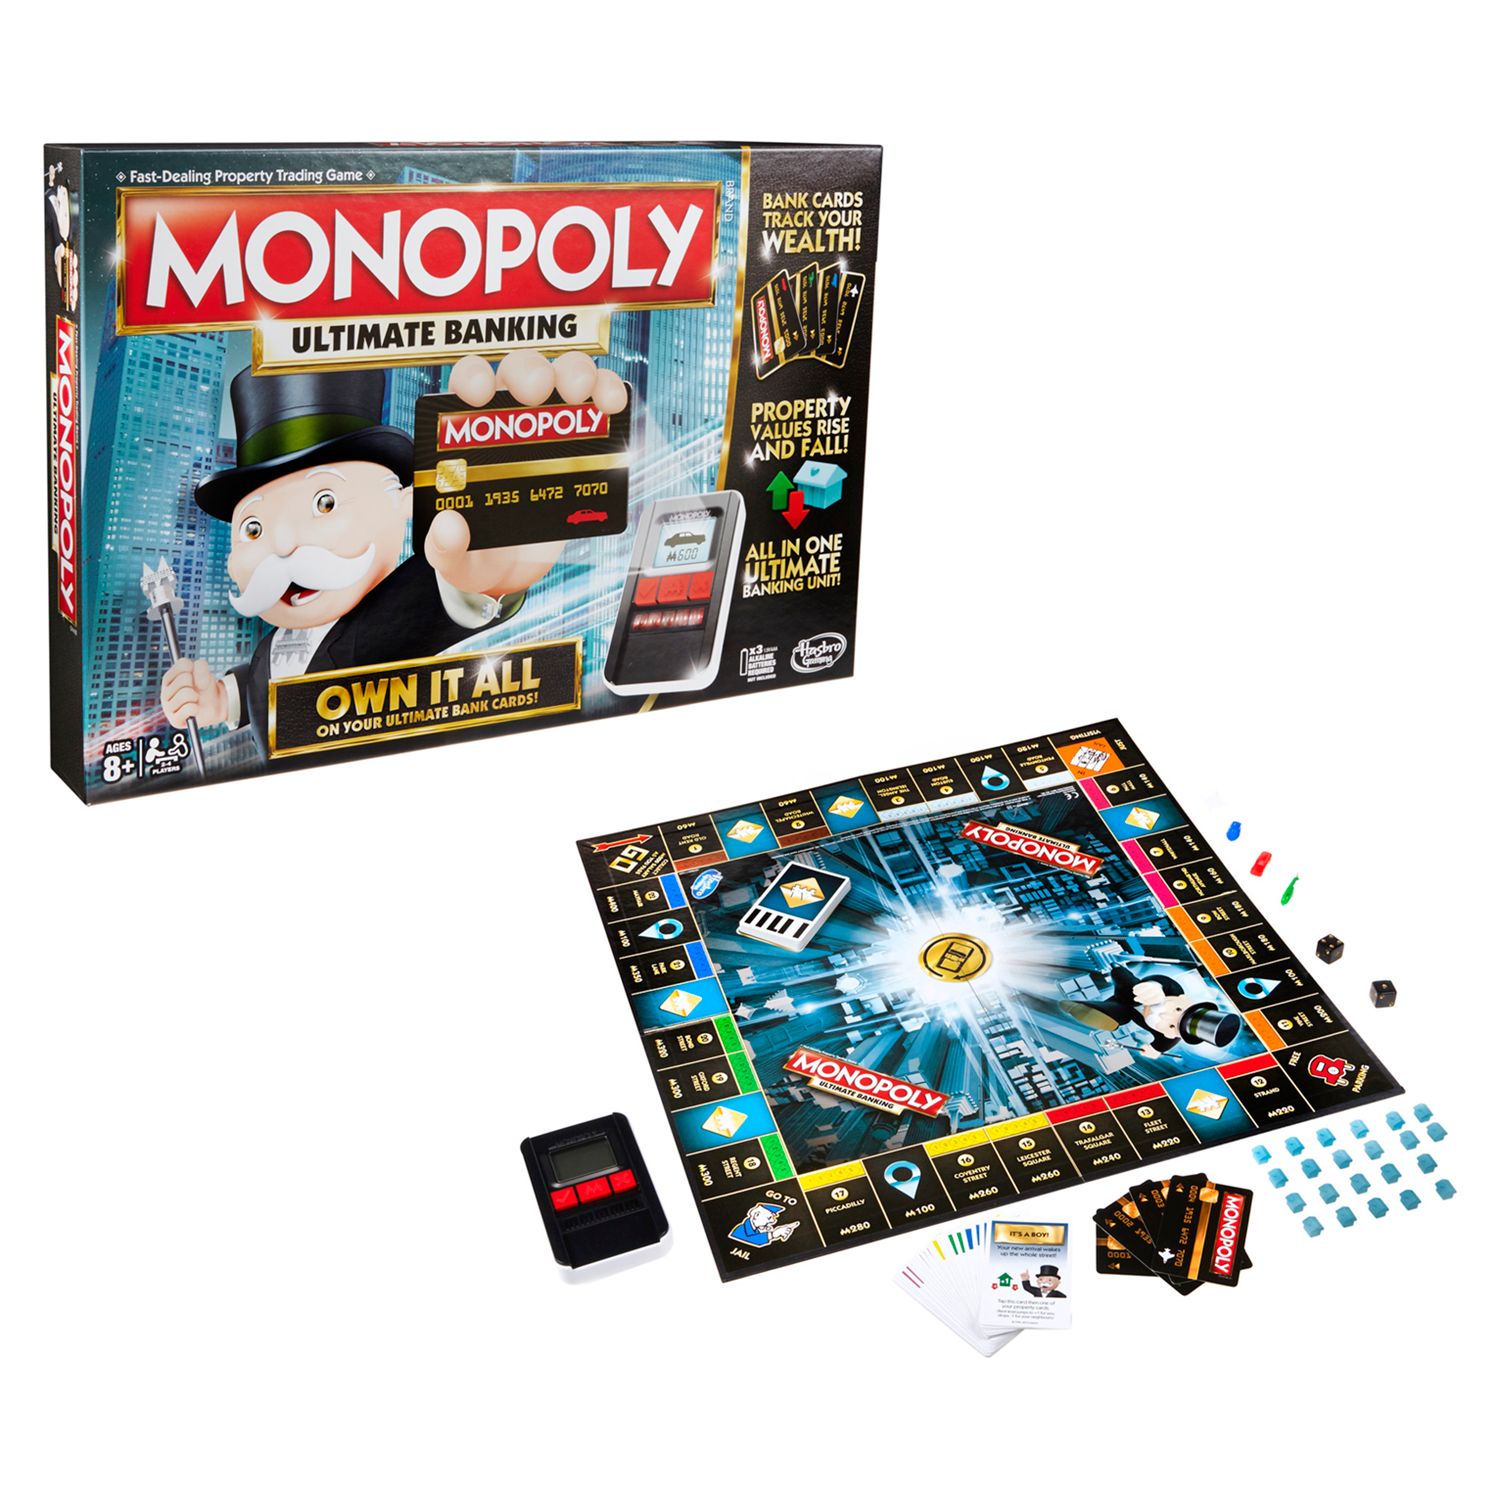 Monopoly Ultimate Banking at John Lewis & Partners